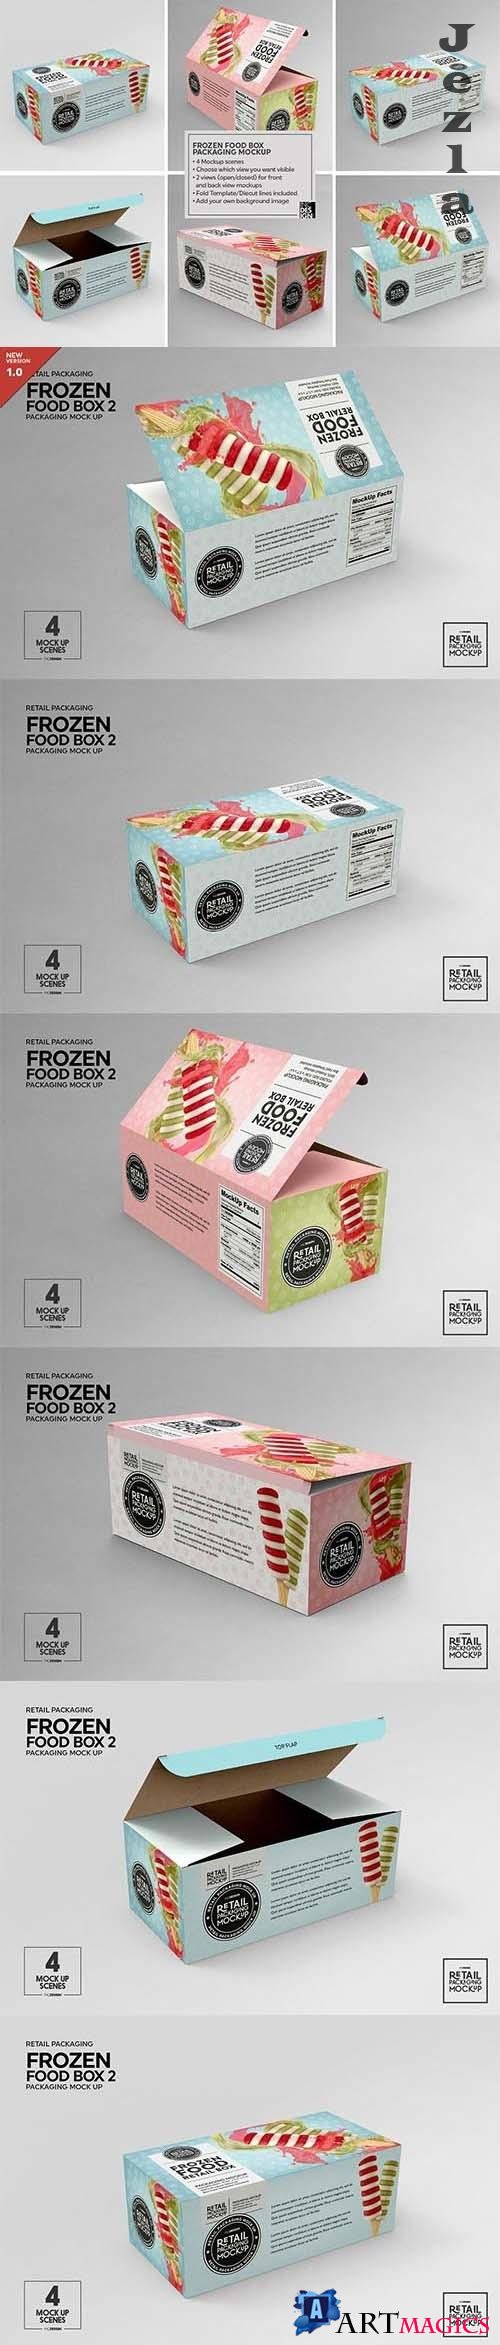 CreativeMarket - Retail Frozen Food Packaging2 Mockup 5730740